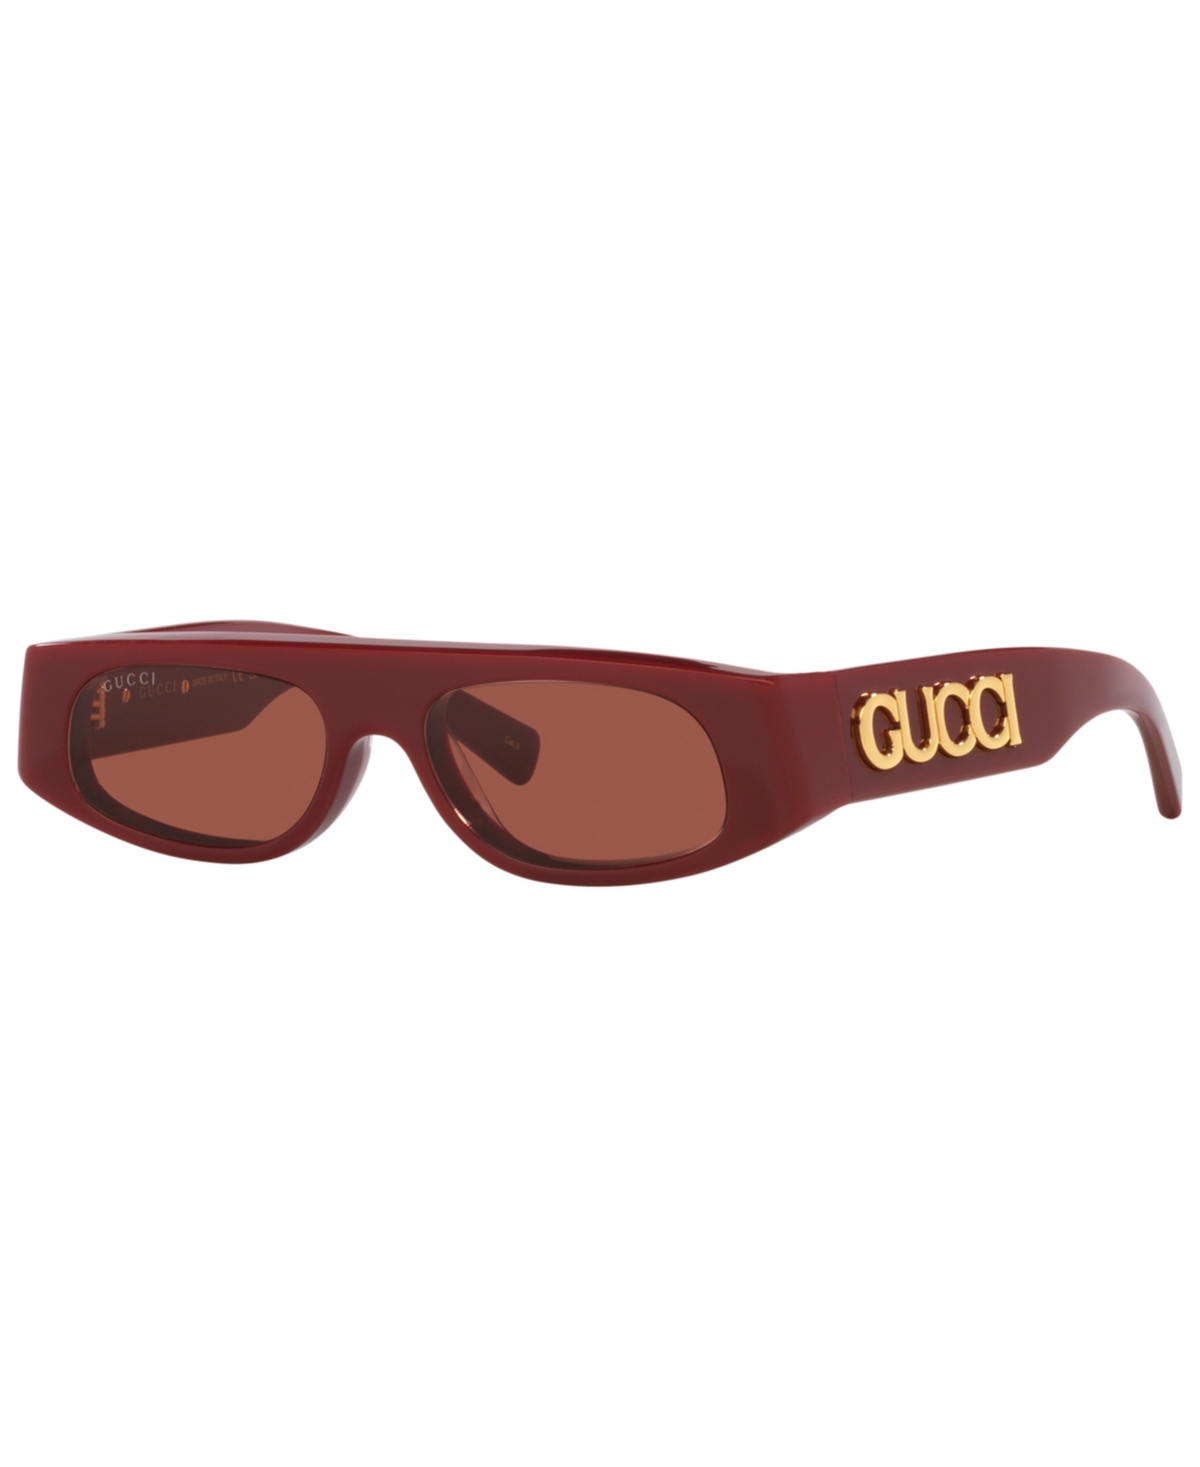 Women's Sunglasses, JC4001B - Burgandy